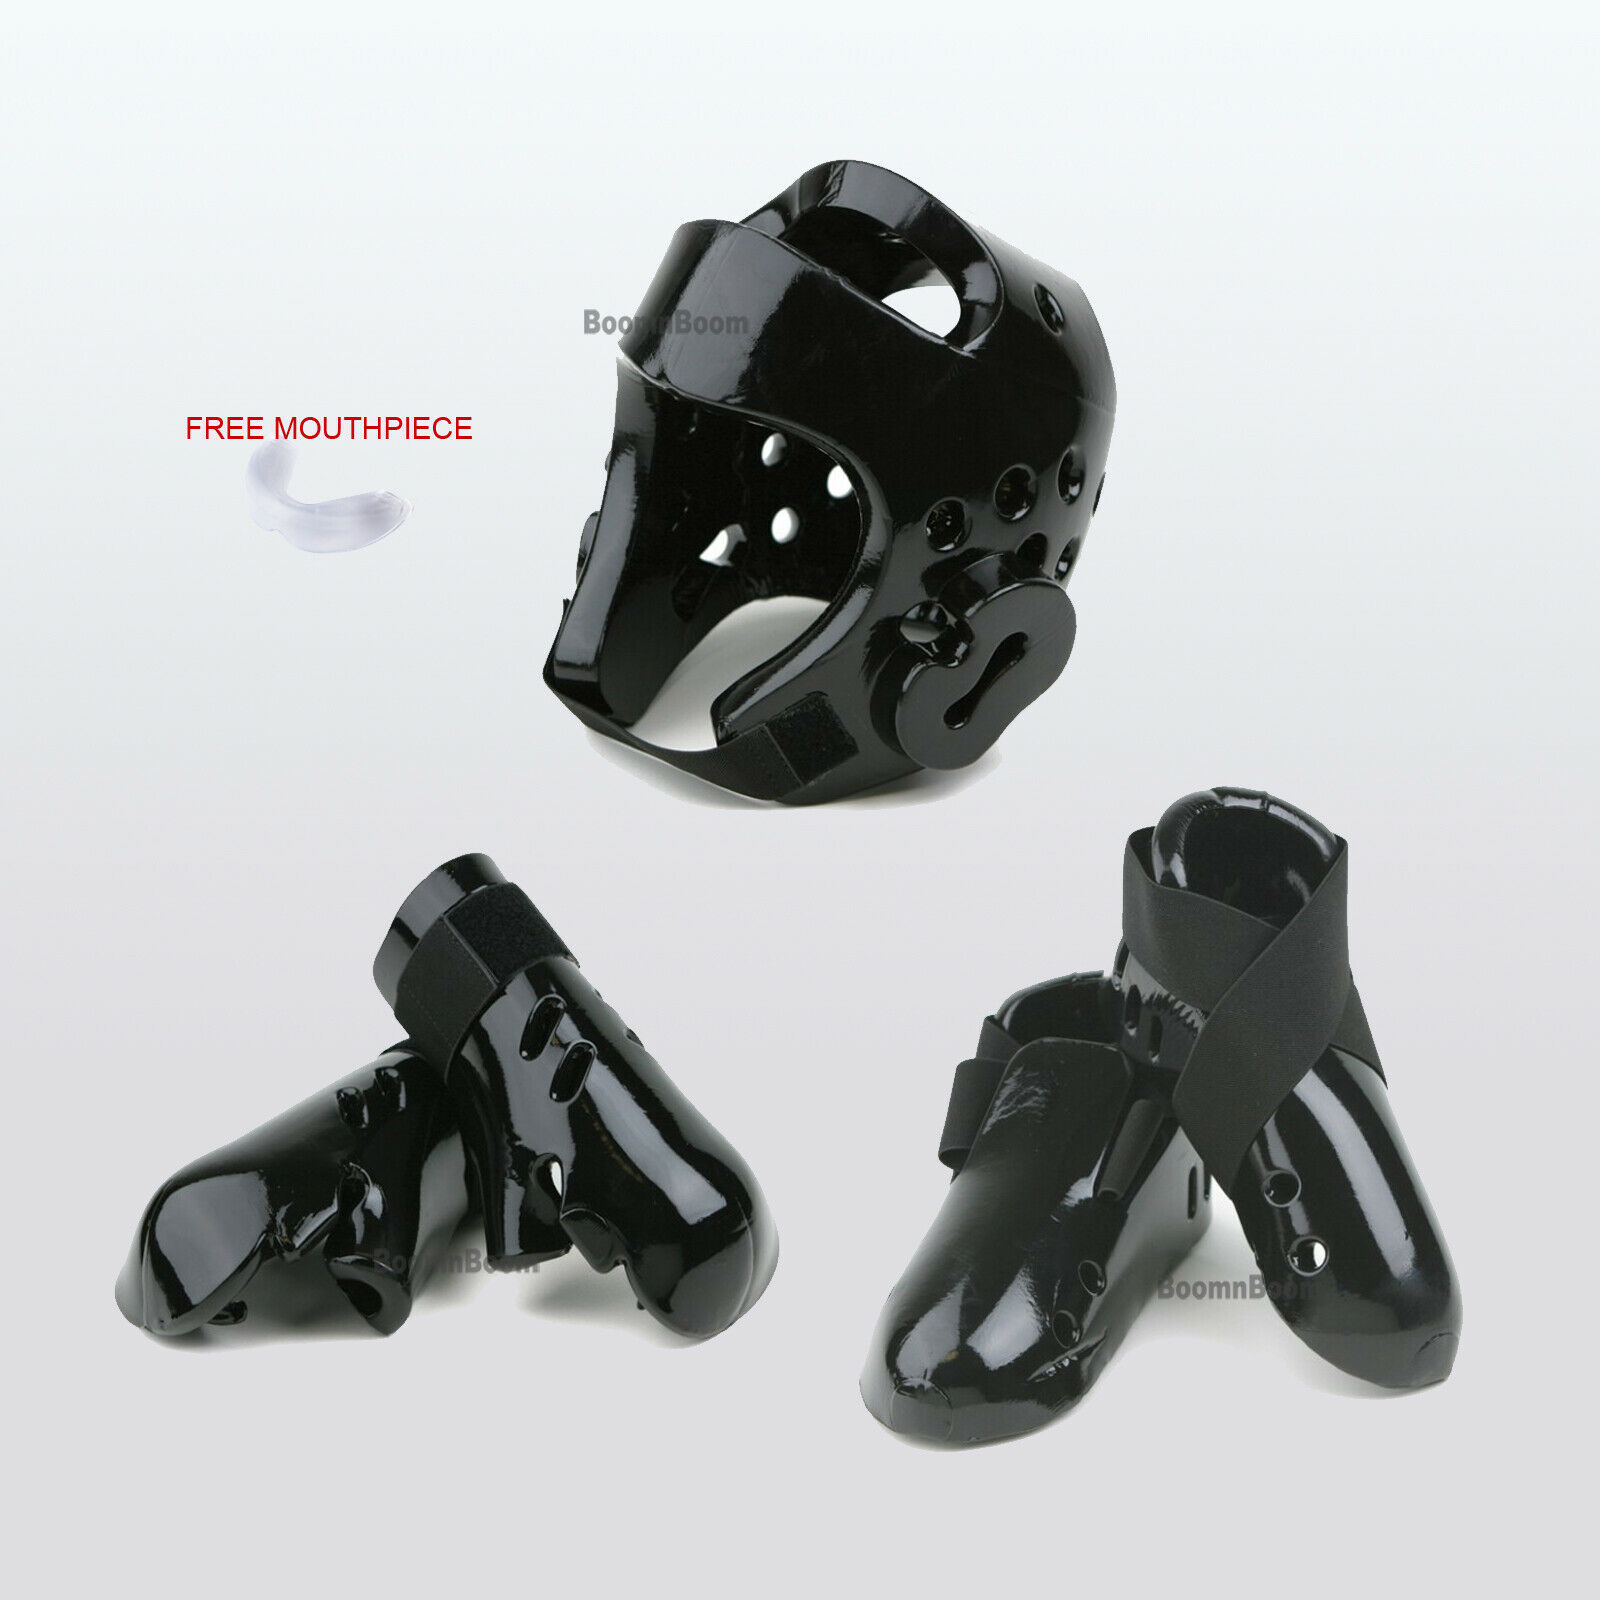 Karate Sparring Gear Basic set New Foam Headgear,Hand,Foot Protector Guard-BLACK